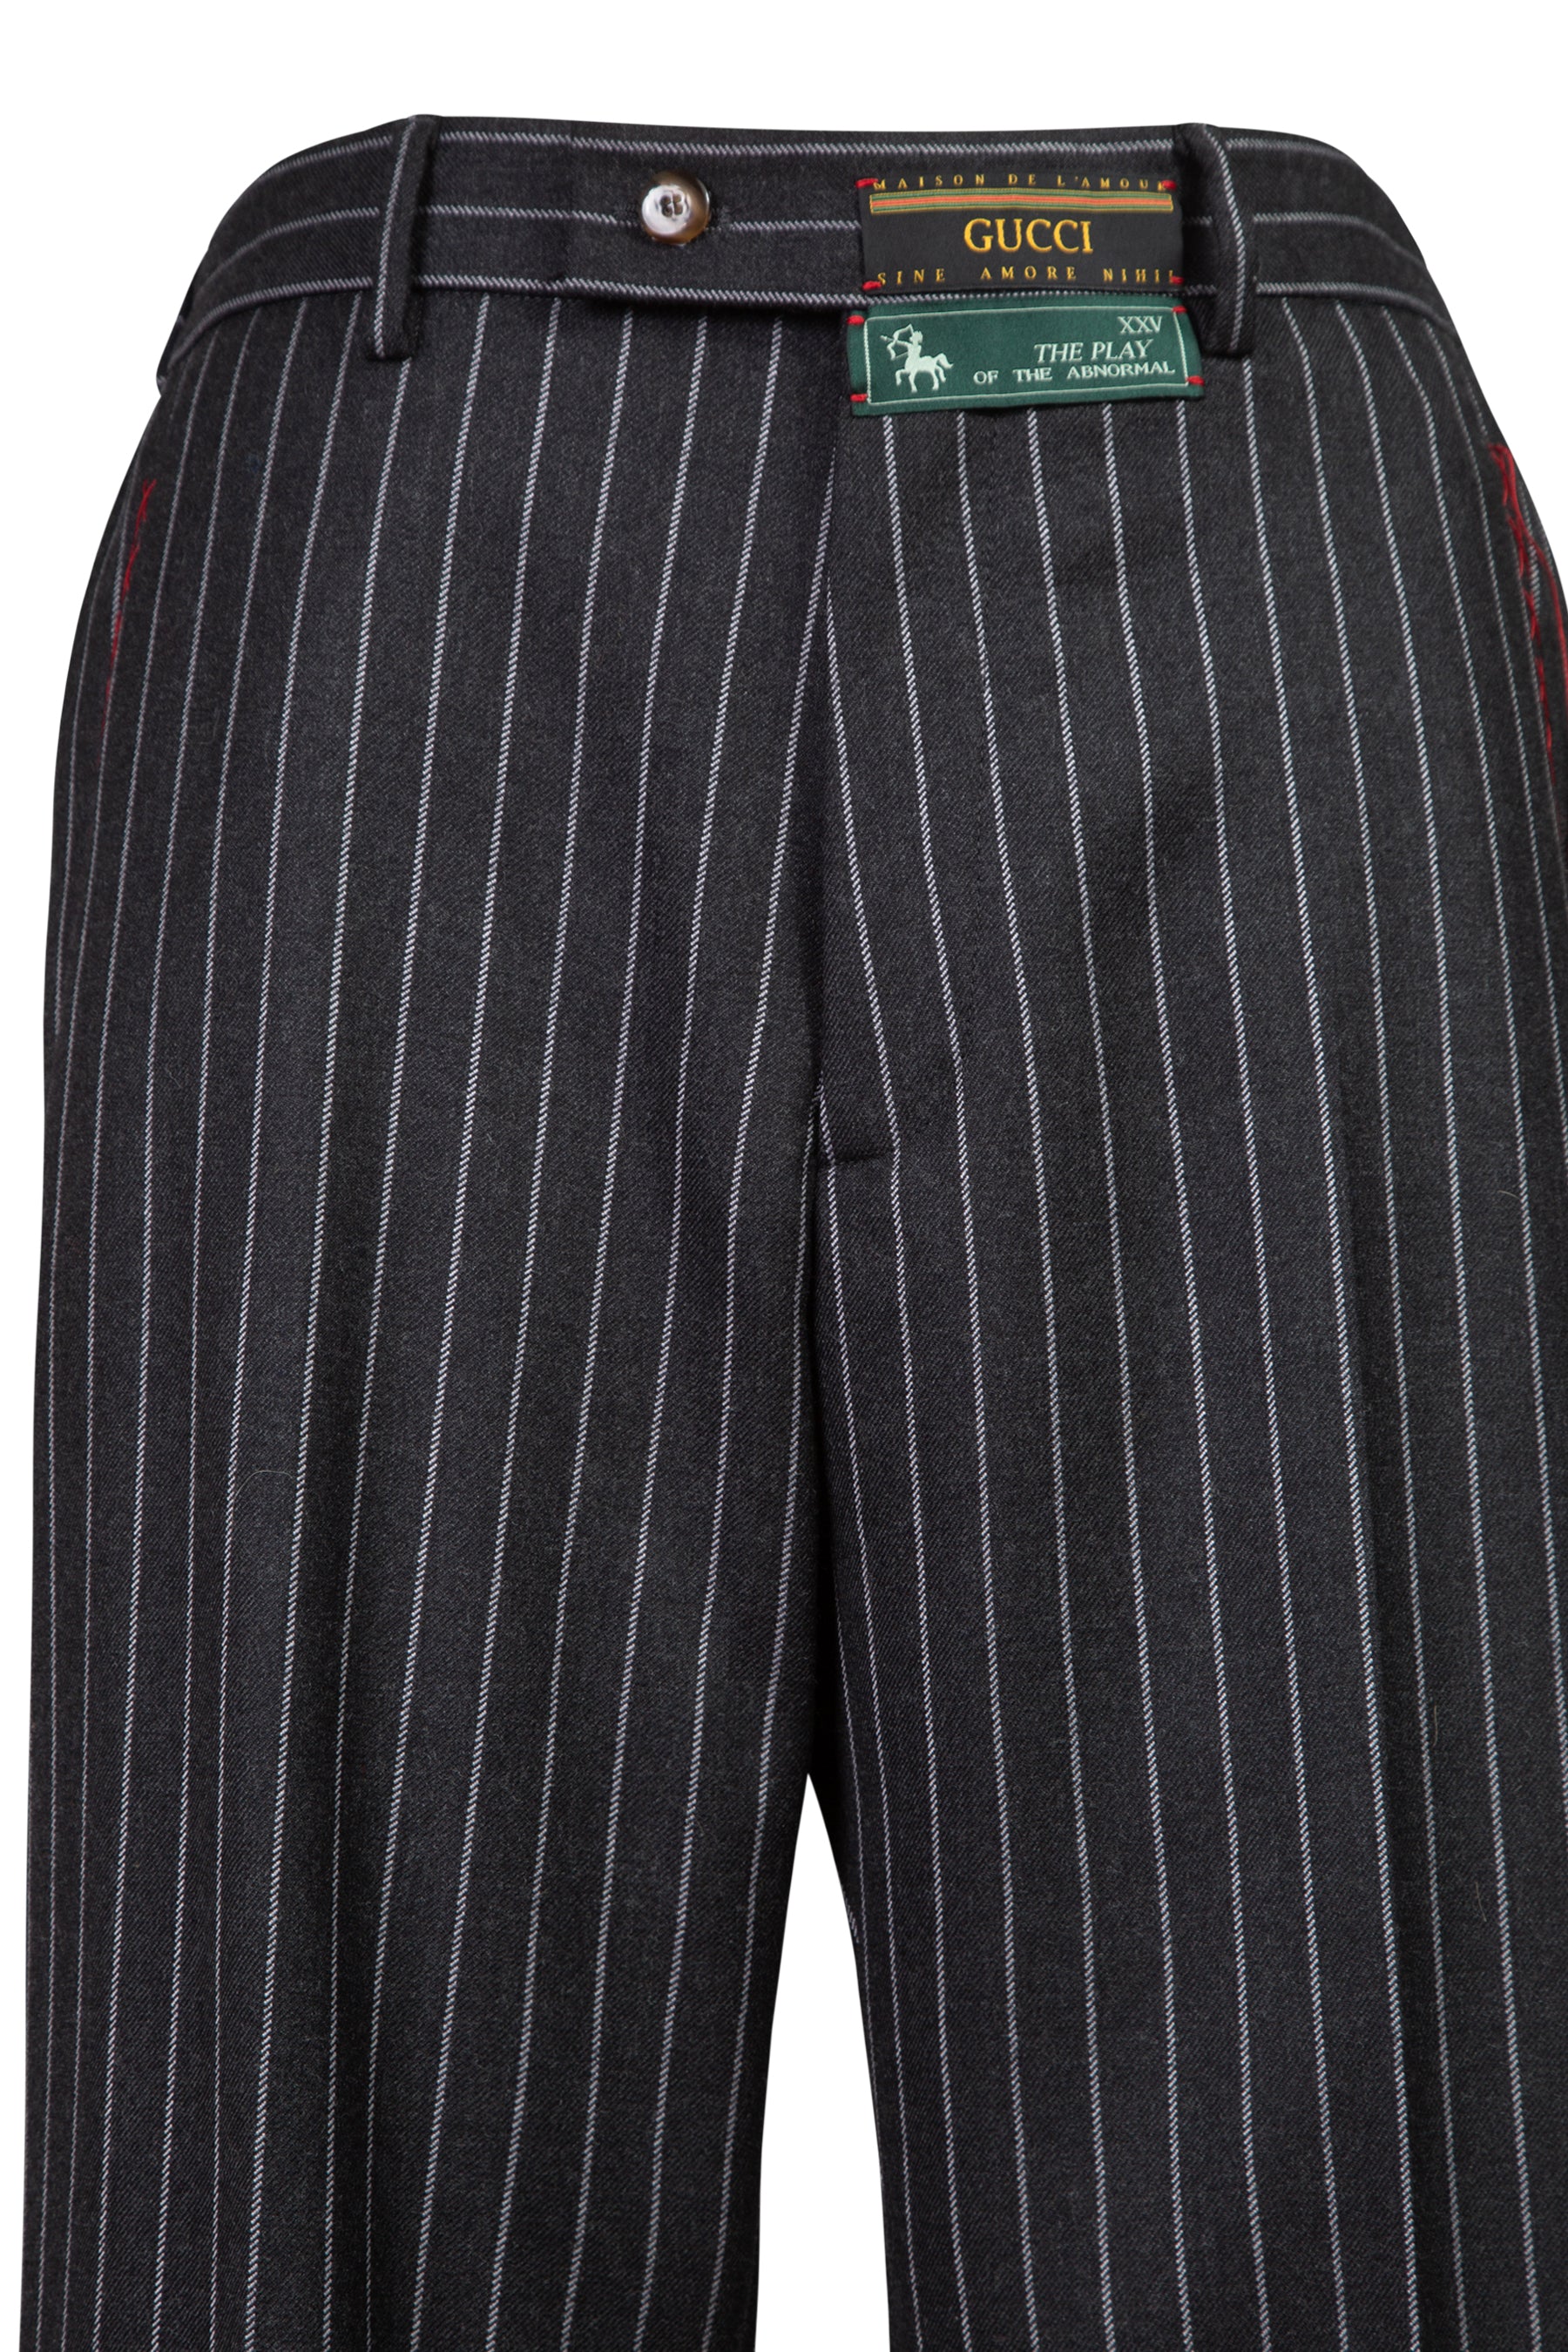 Gucci Sartorial Pant in Classic Medium Stripe